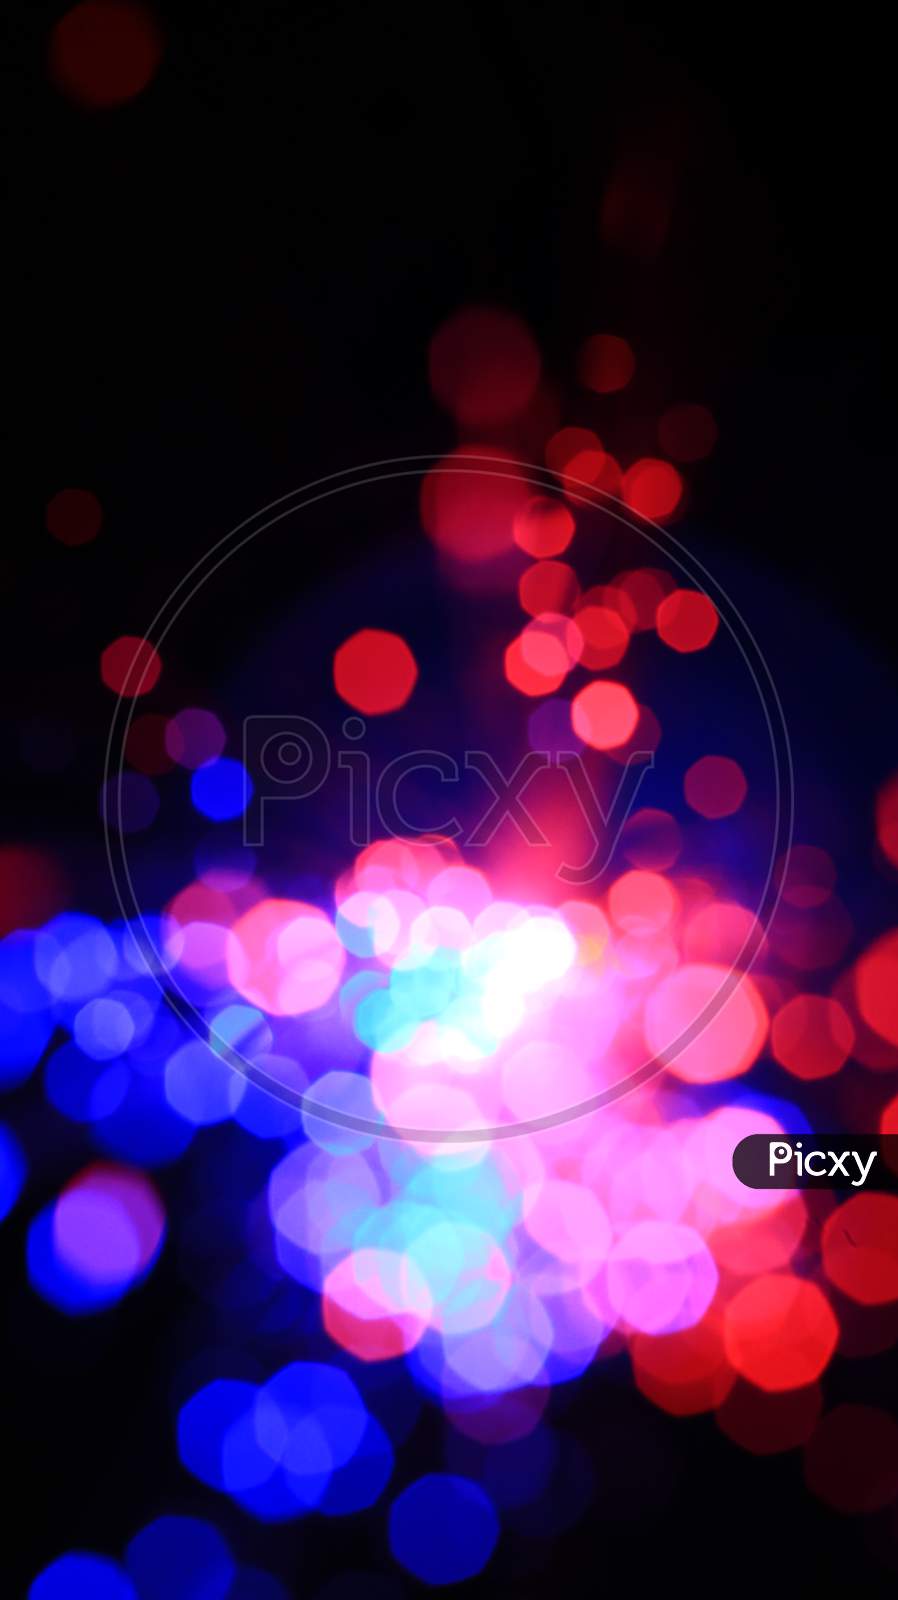 Focused Blur iPhone Wallpaper HD Cool Image  Download 